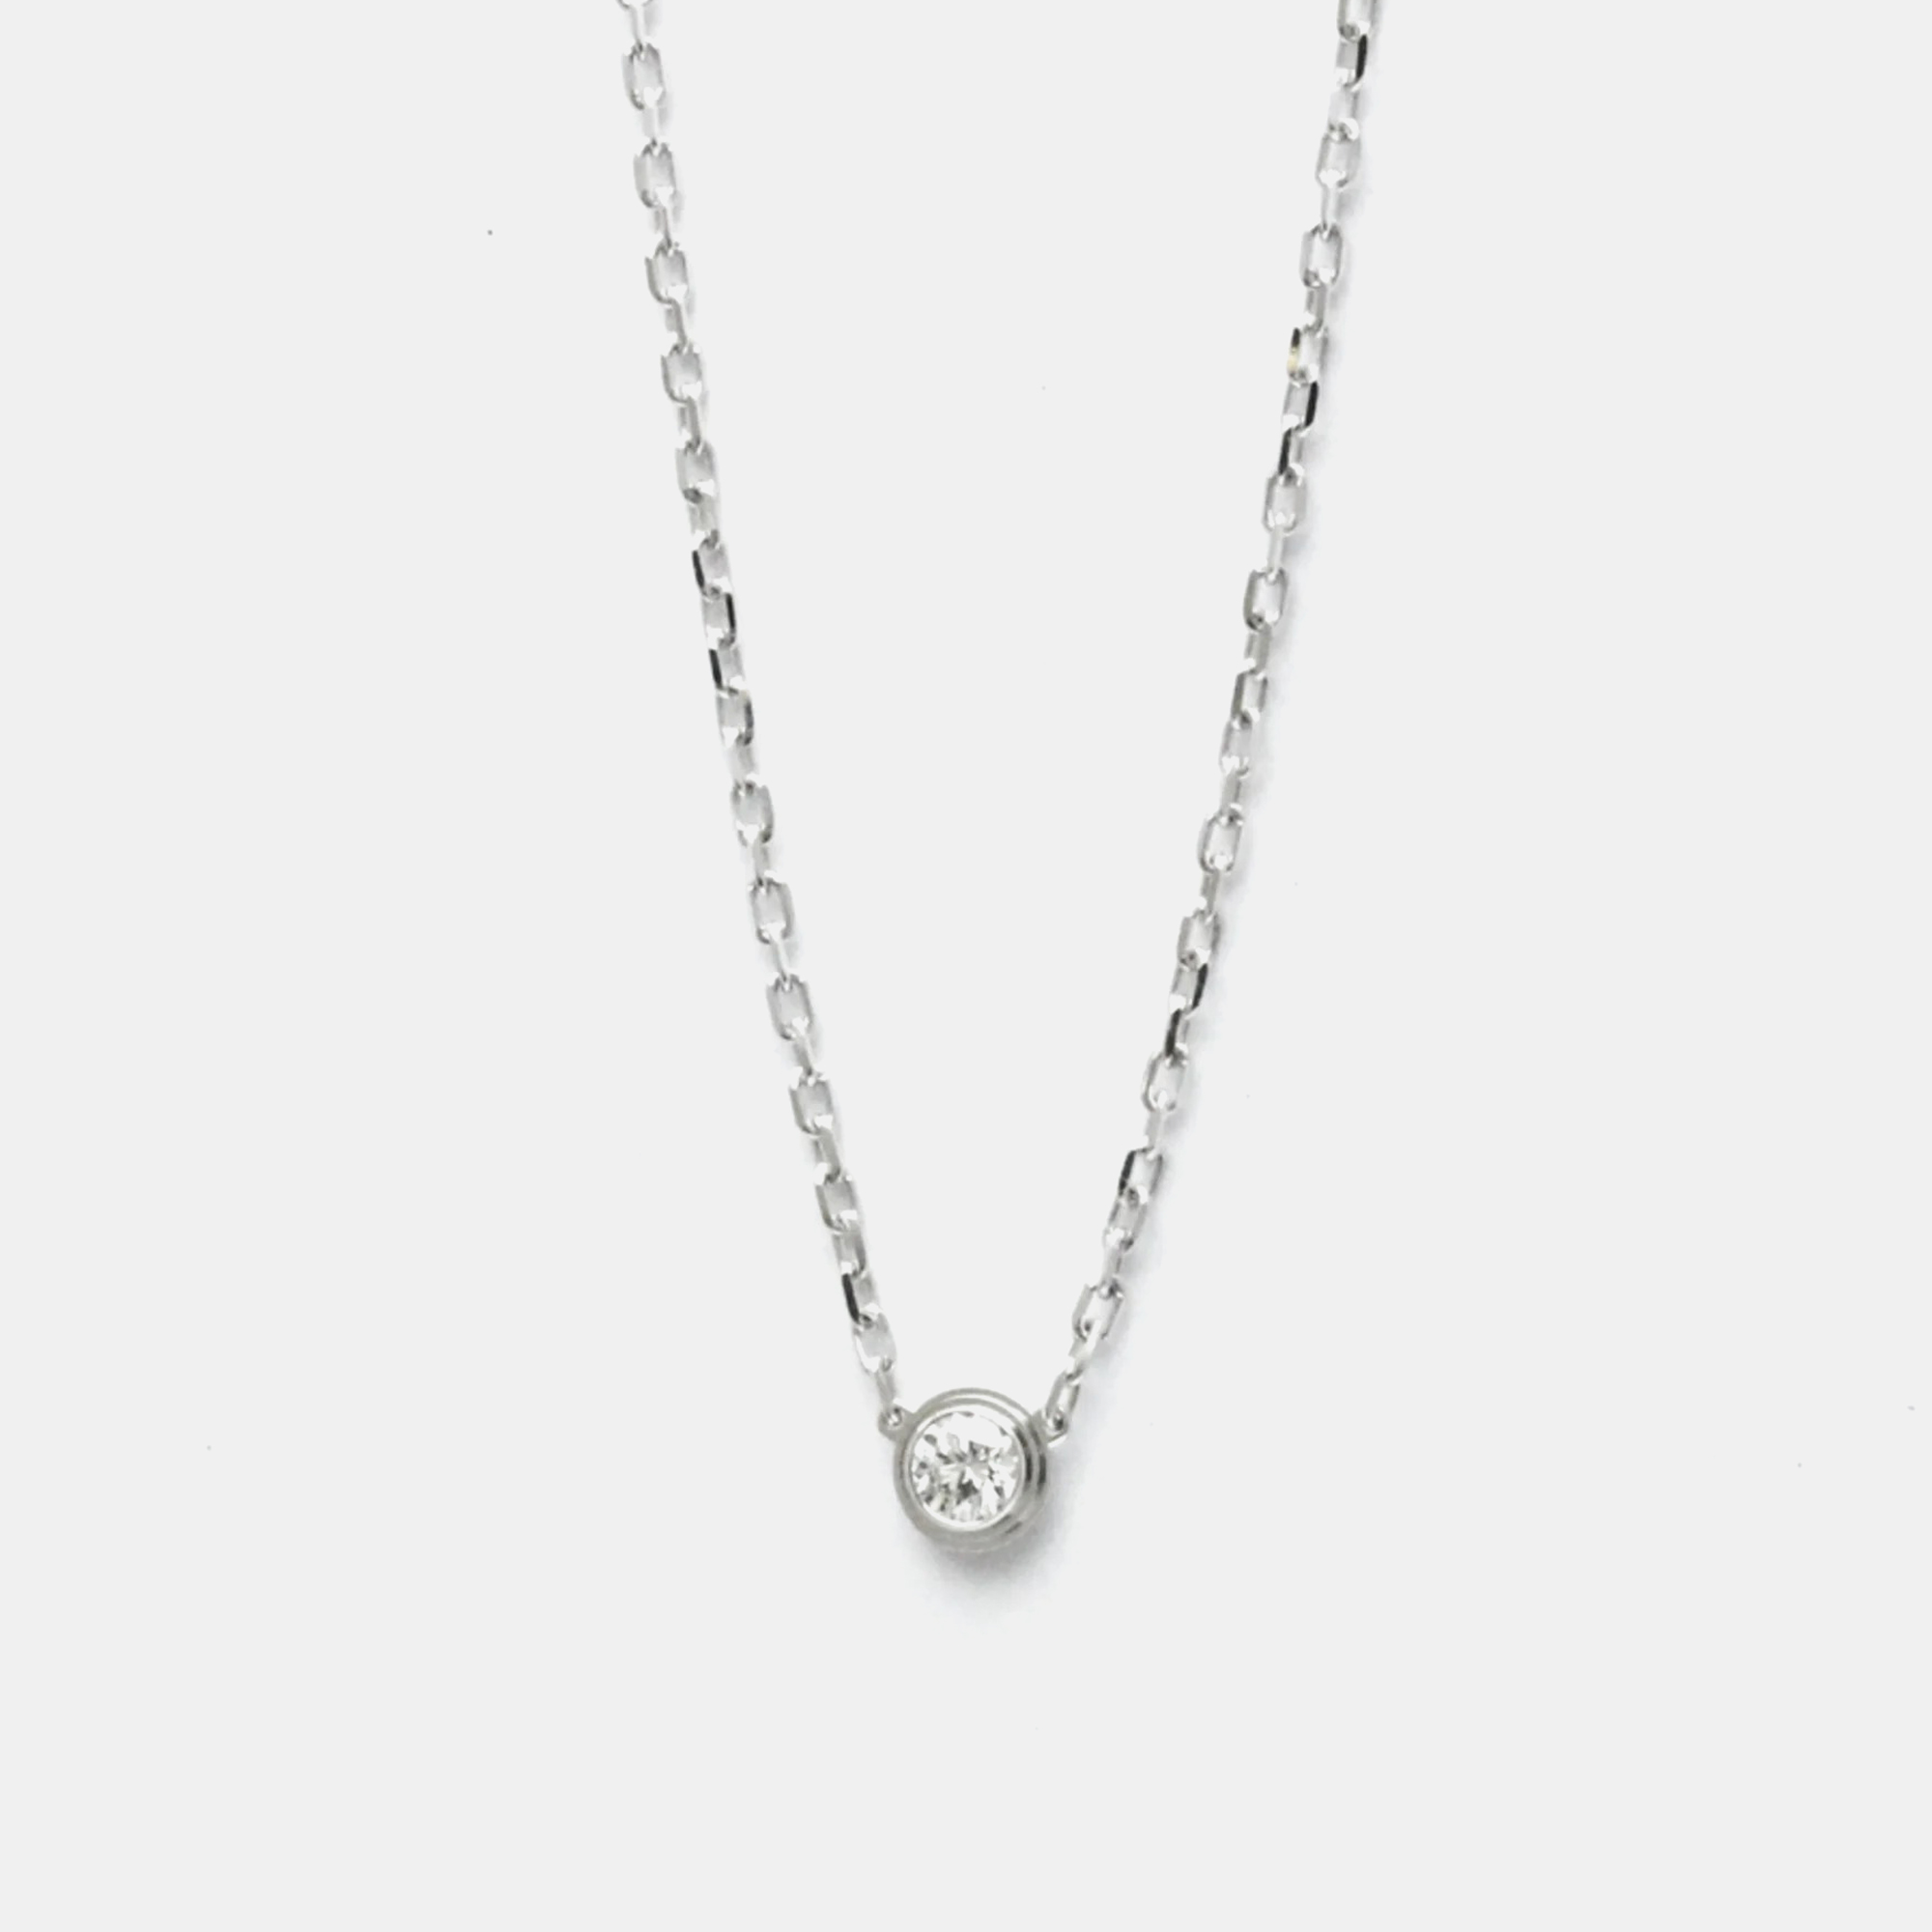 Cartier 18k white gold and diamond d'amour pendant necklace